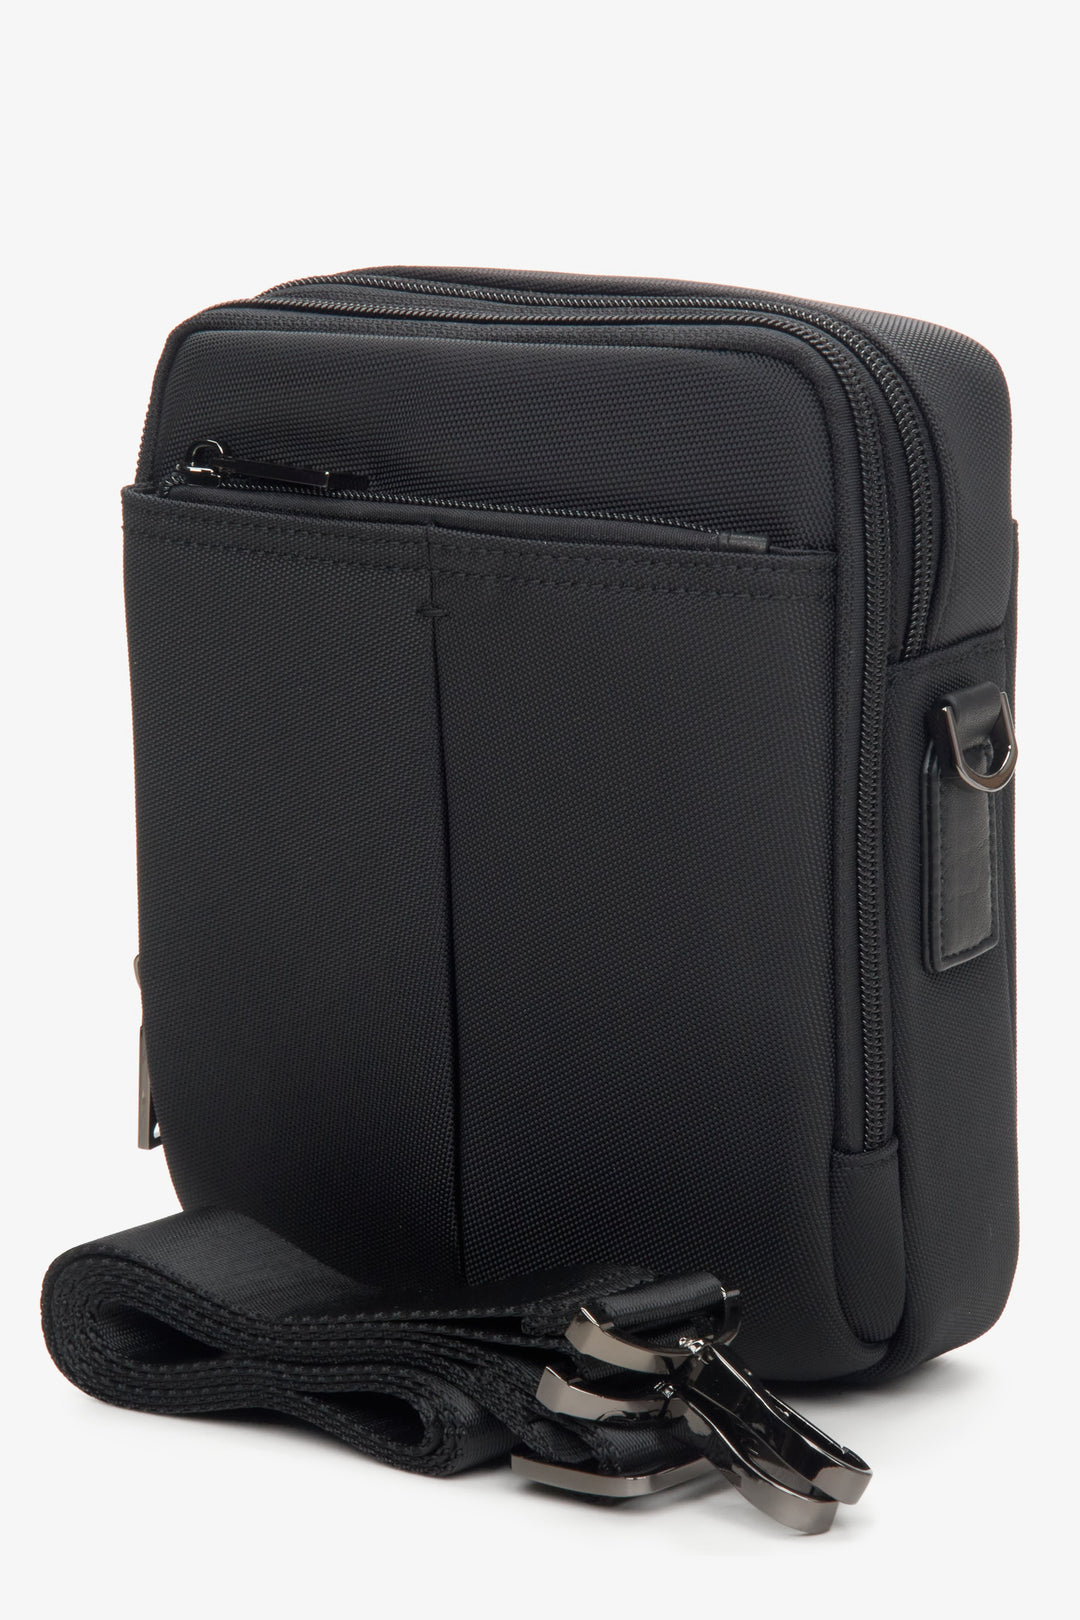 Men's black bag by Estro with an adjustable strap.